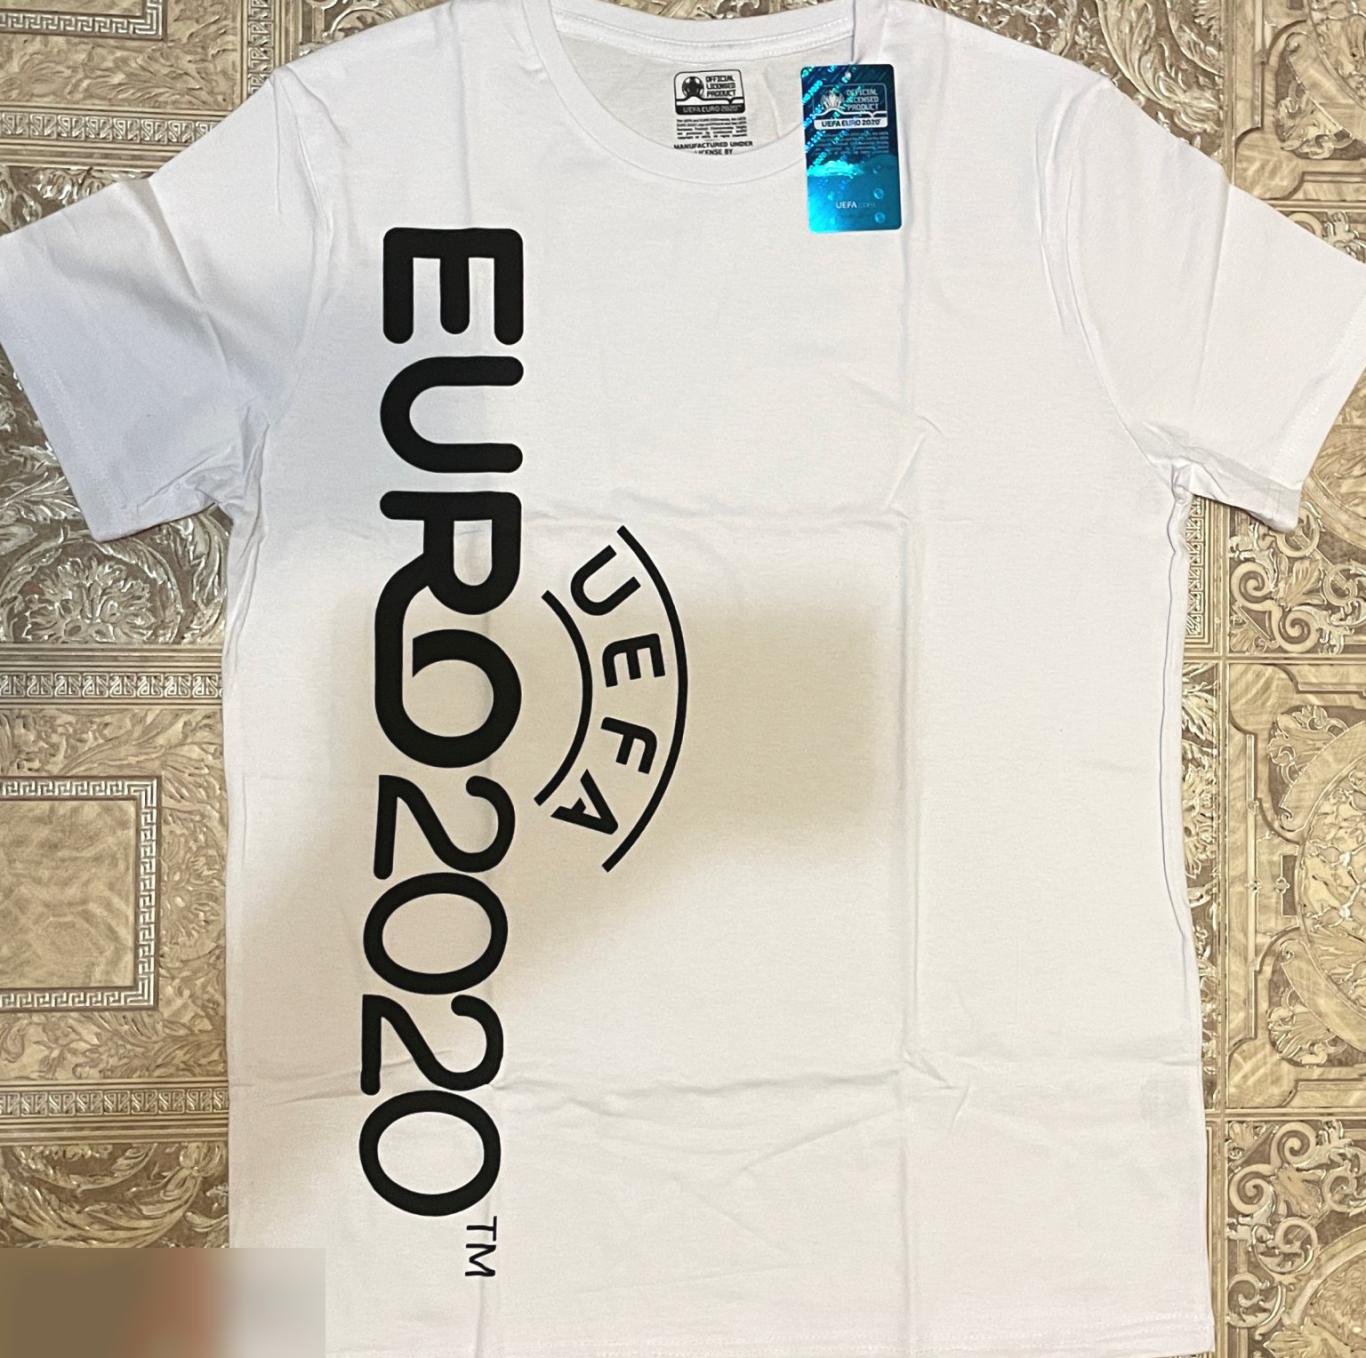 Набор 6 мужских футболок ЕВРО 2020 (L). 2